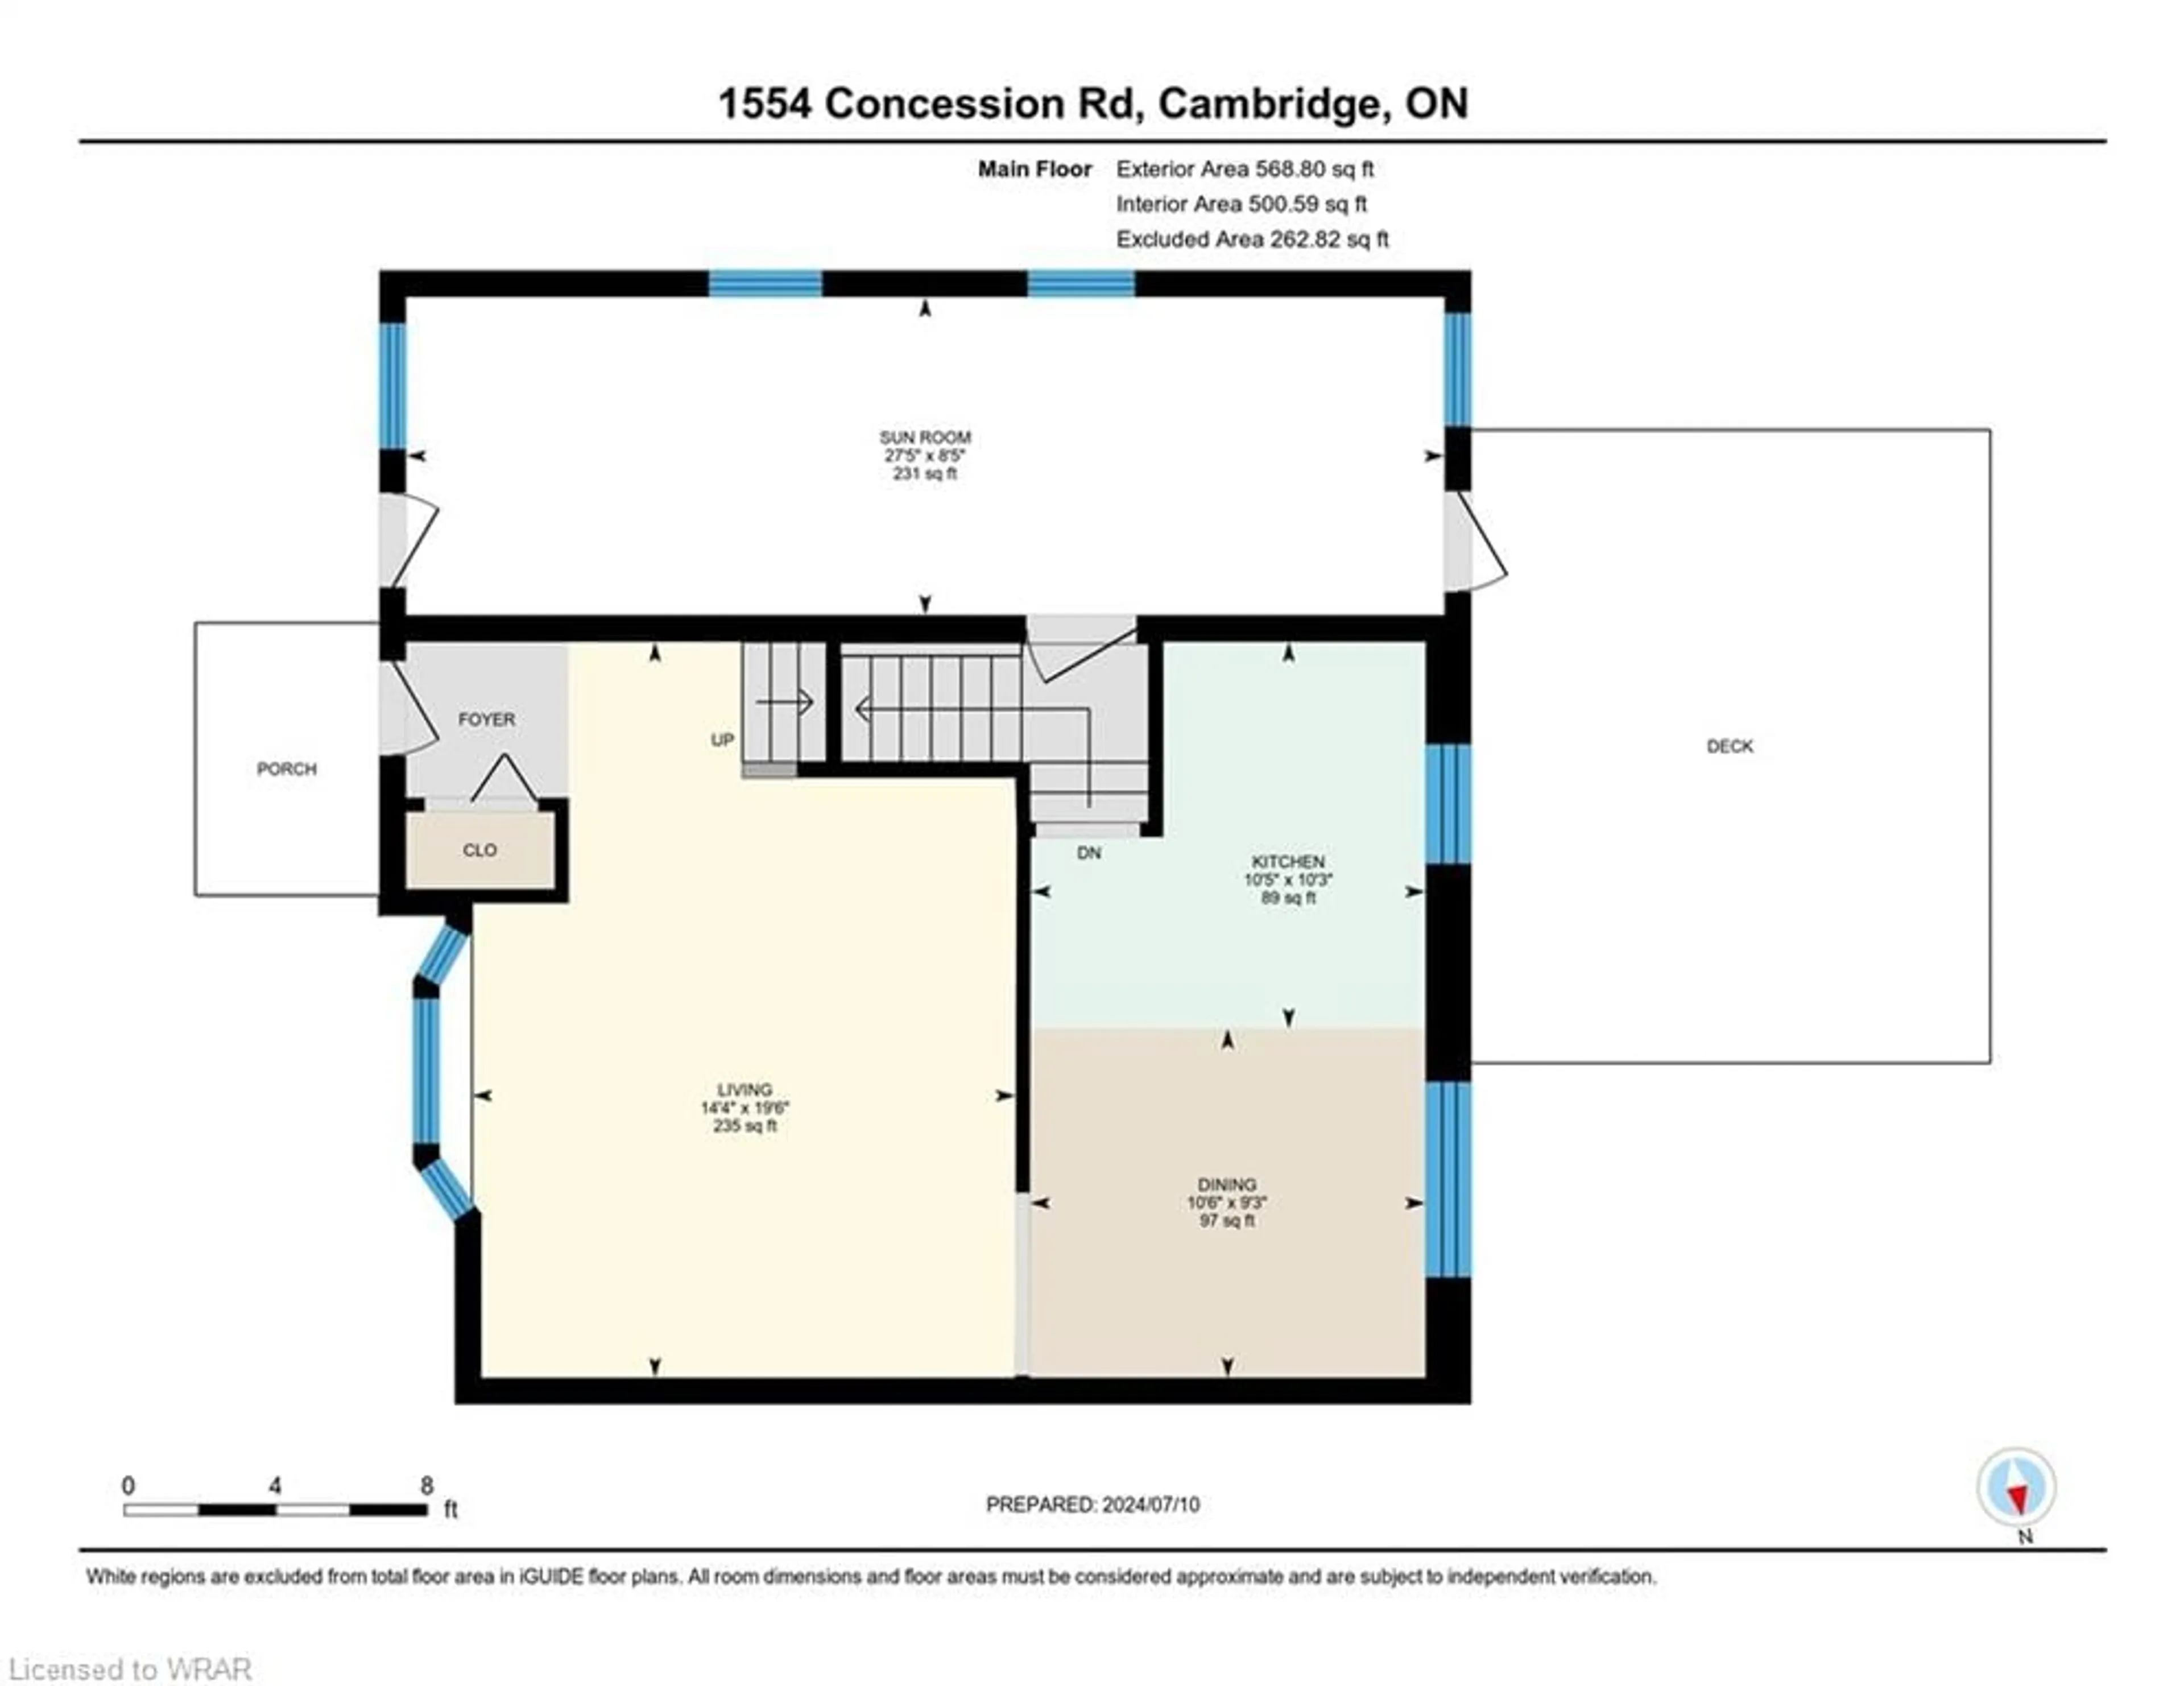 Floor plan for 1554 Concession Rd, Cambridge Ontario N3H 4L9